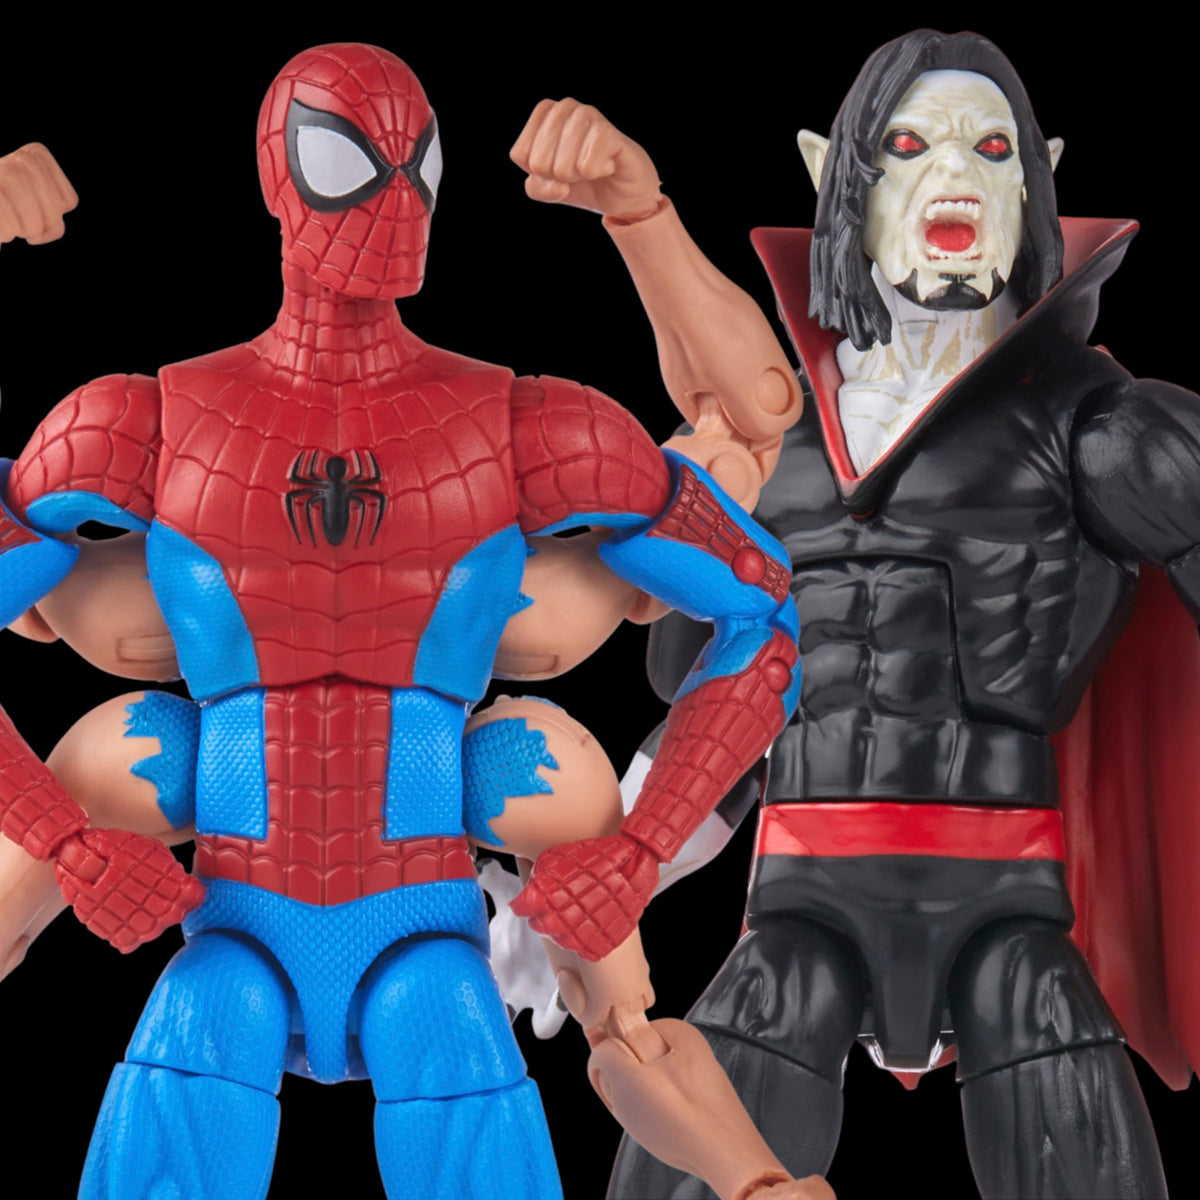 Marvel Legends Series Spider-Man vs Morbius Action Figures Kids Toy for  Boys & Girls, 2 Pack 